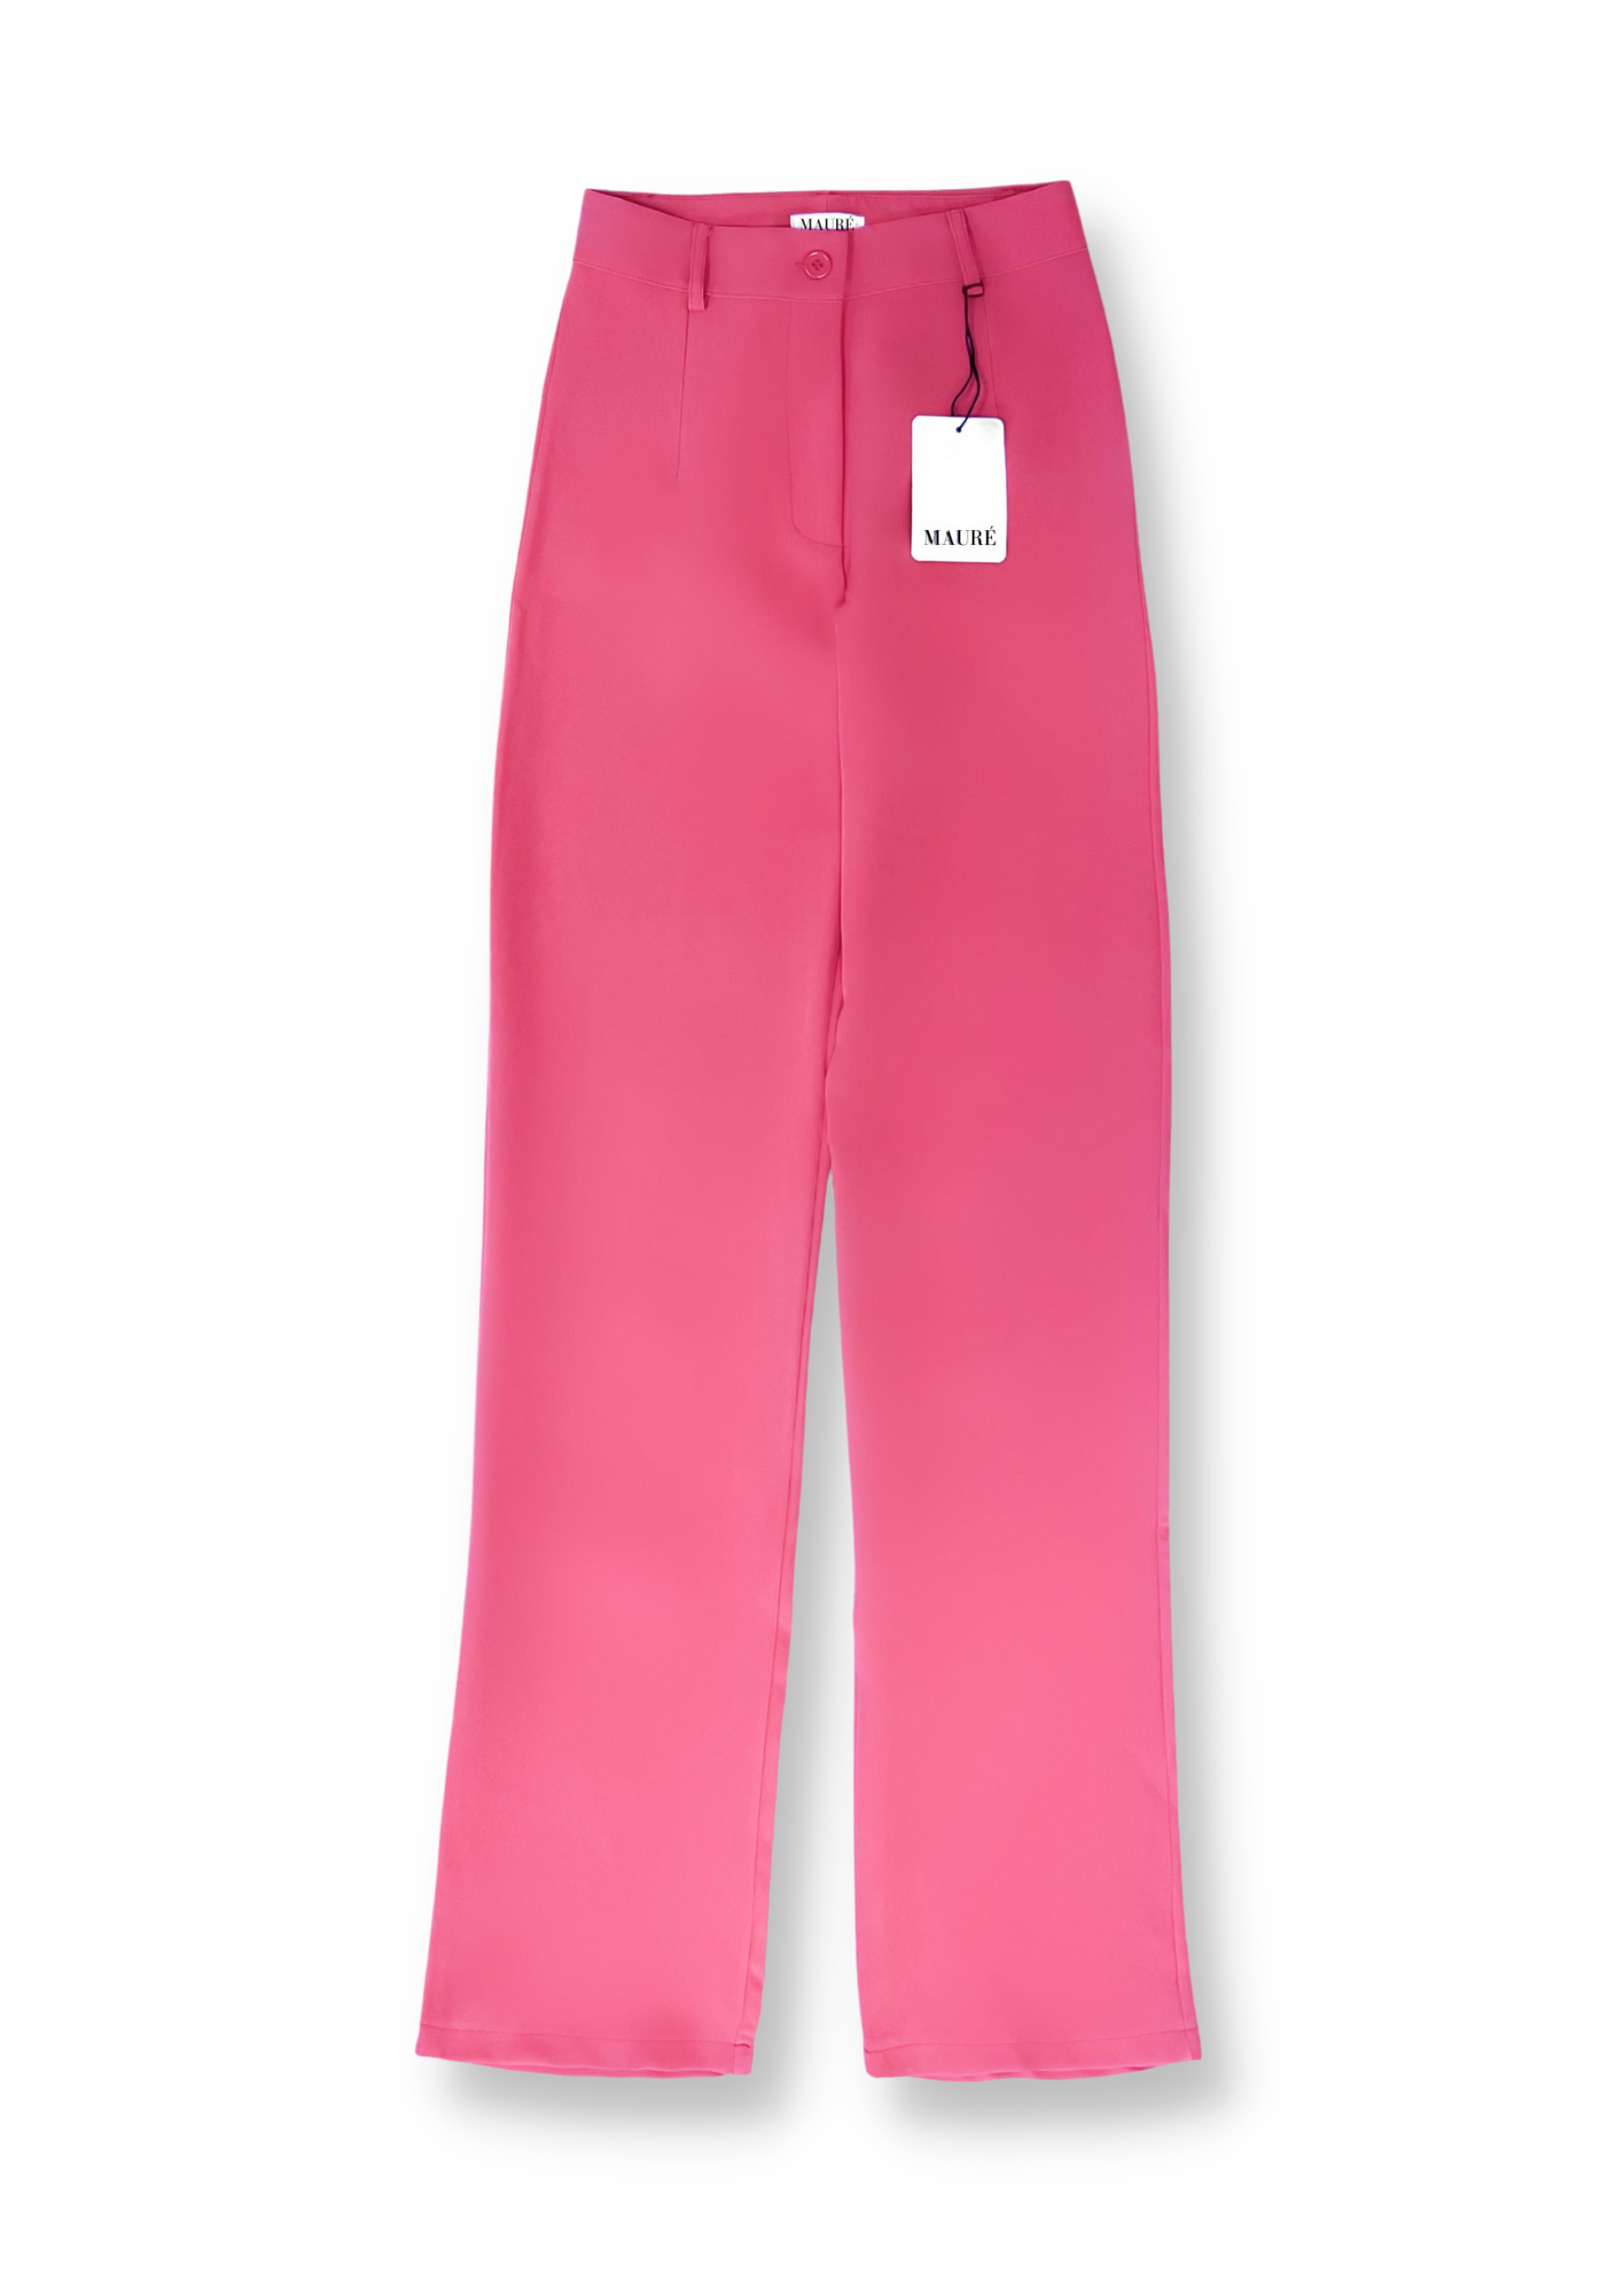 Straight leg pants classic pretty pink (REGULAR)